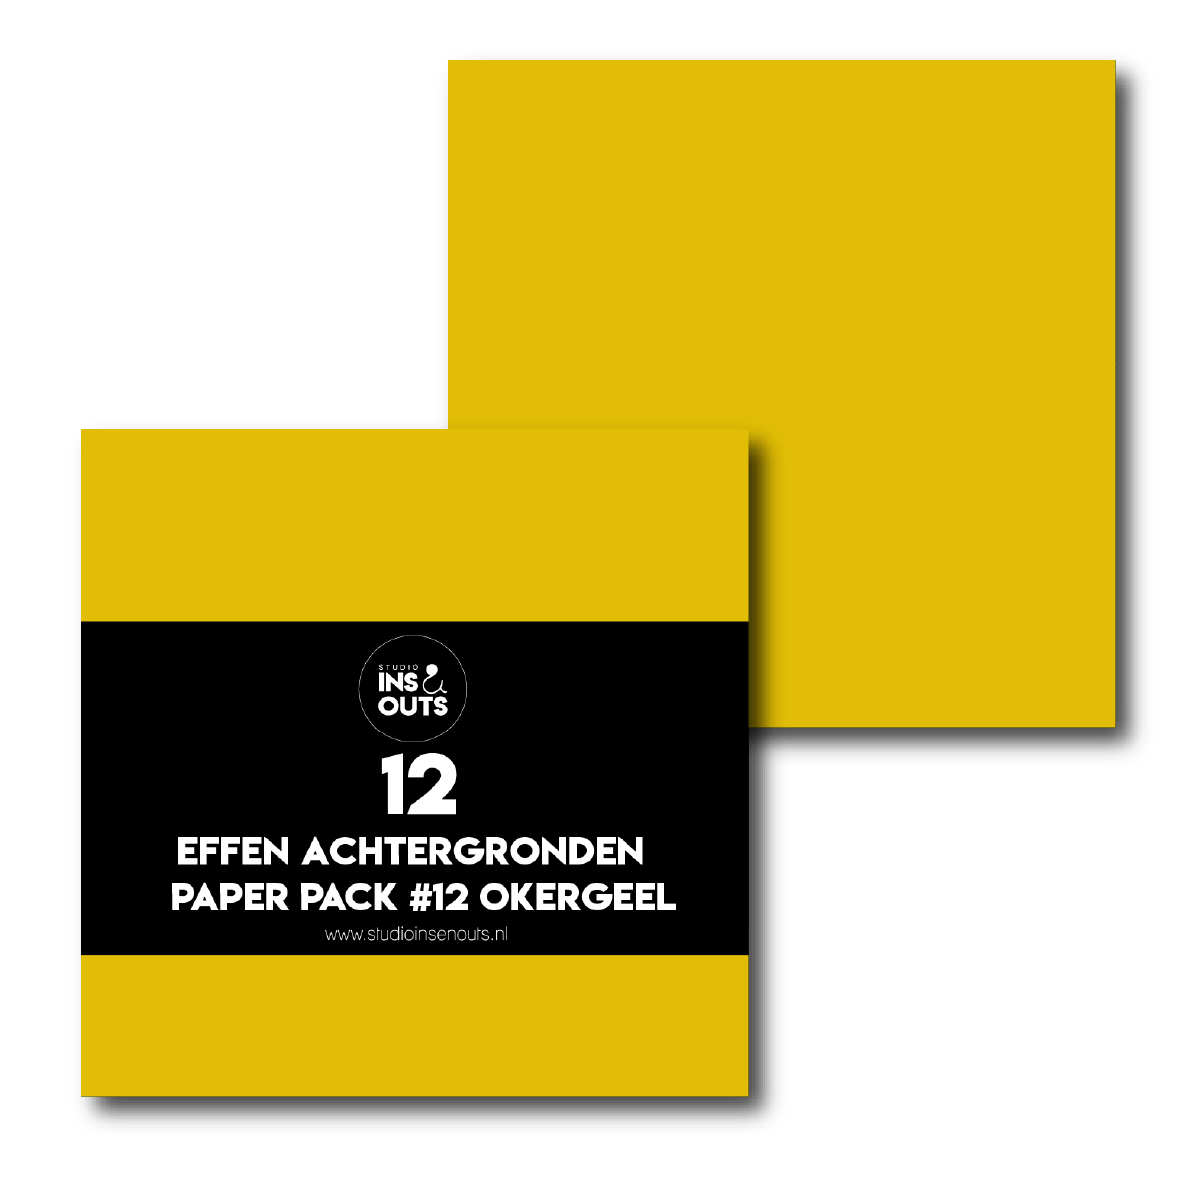 Paper Pack #12 - okergeel effen